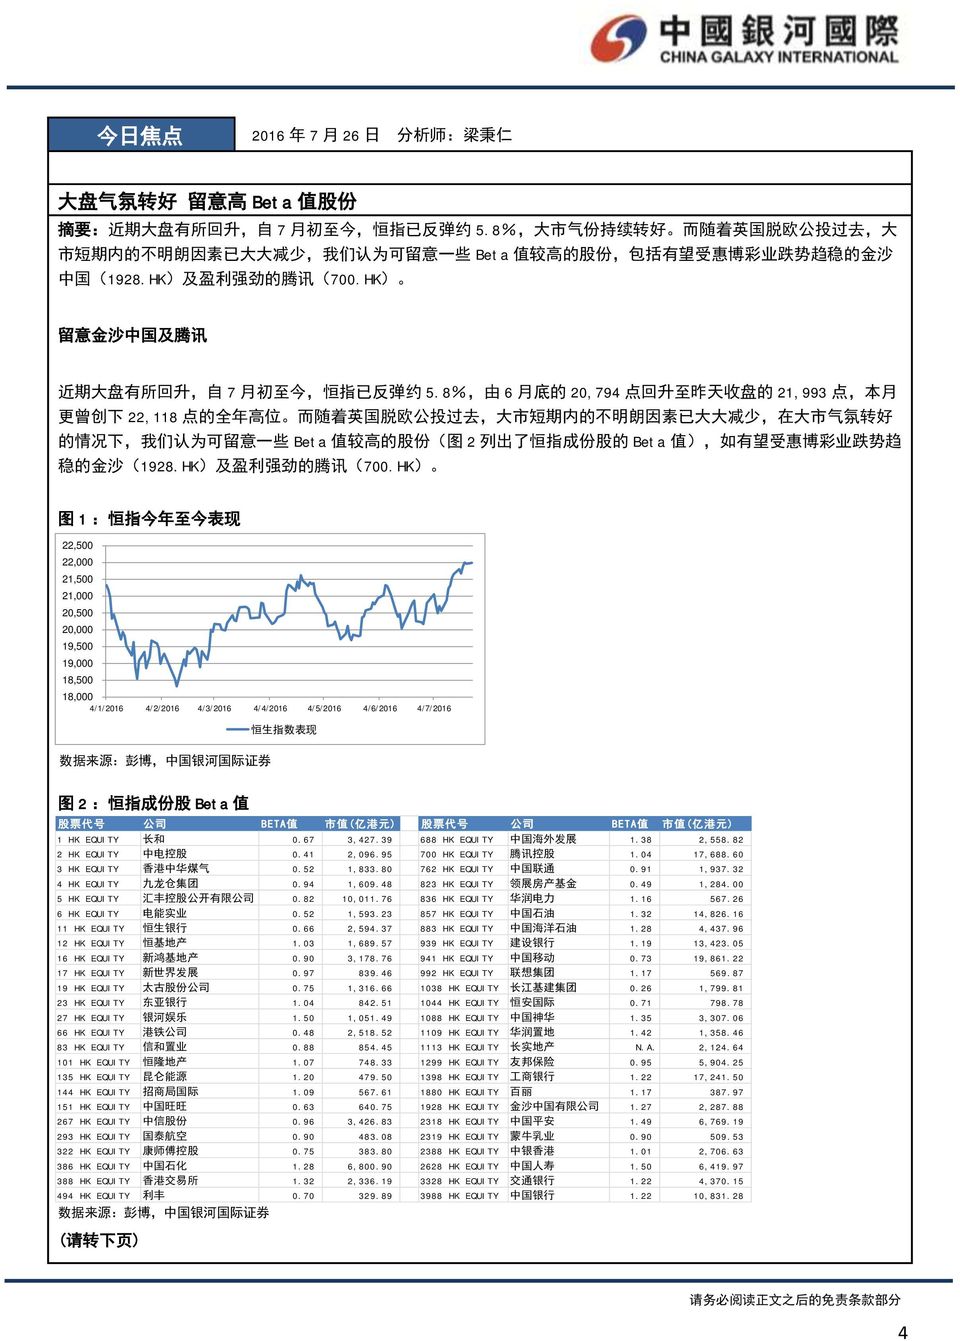 HK) 留 意 金 沙 中 国 及 腾 讯 近 期 大 盘 有 所 回 升, 自 7 月 初 至 今, 恒 指 已 反 弹 约 5.